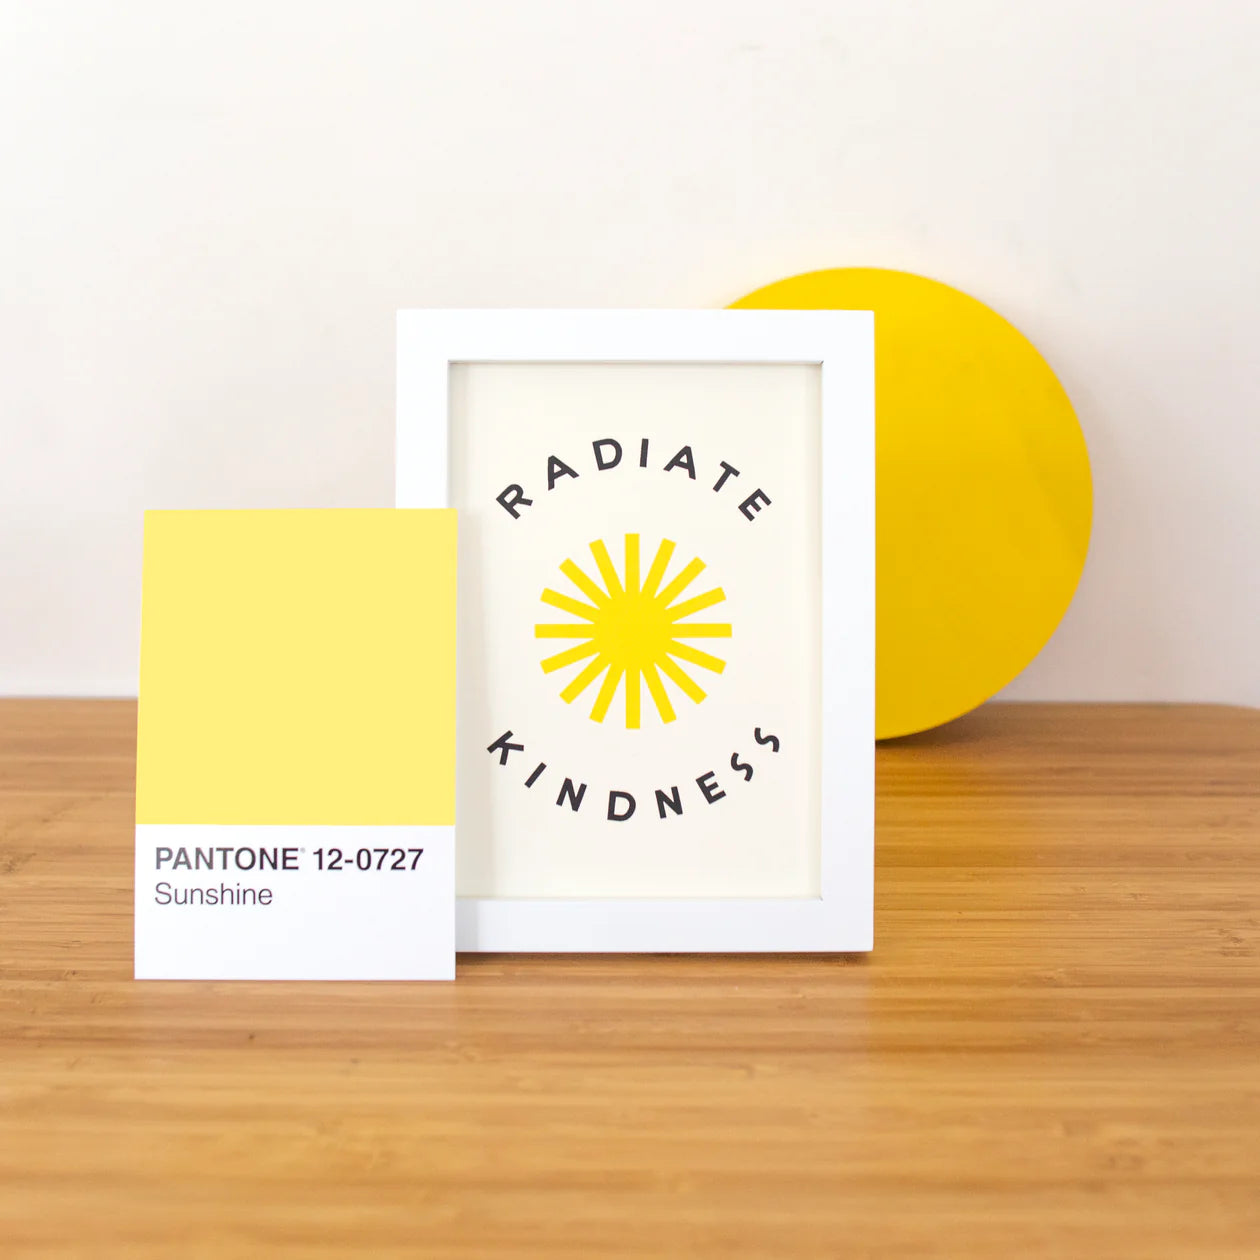 Radiate Kindness 5x7 framed print